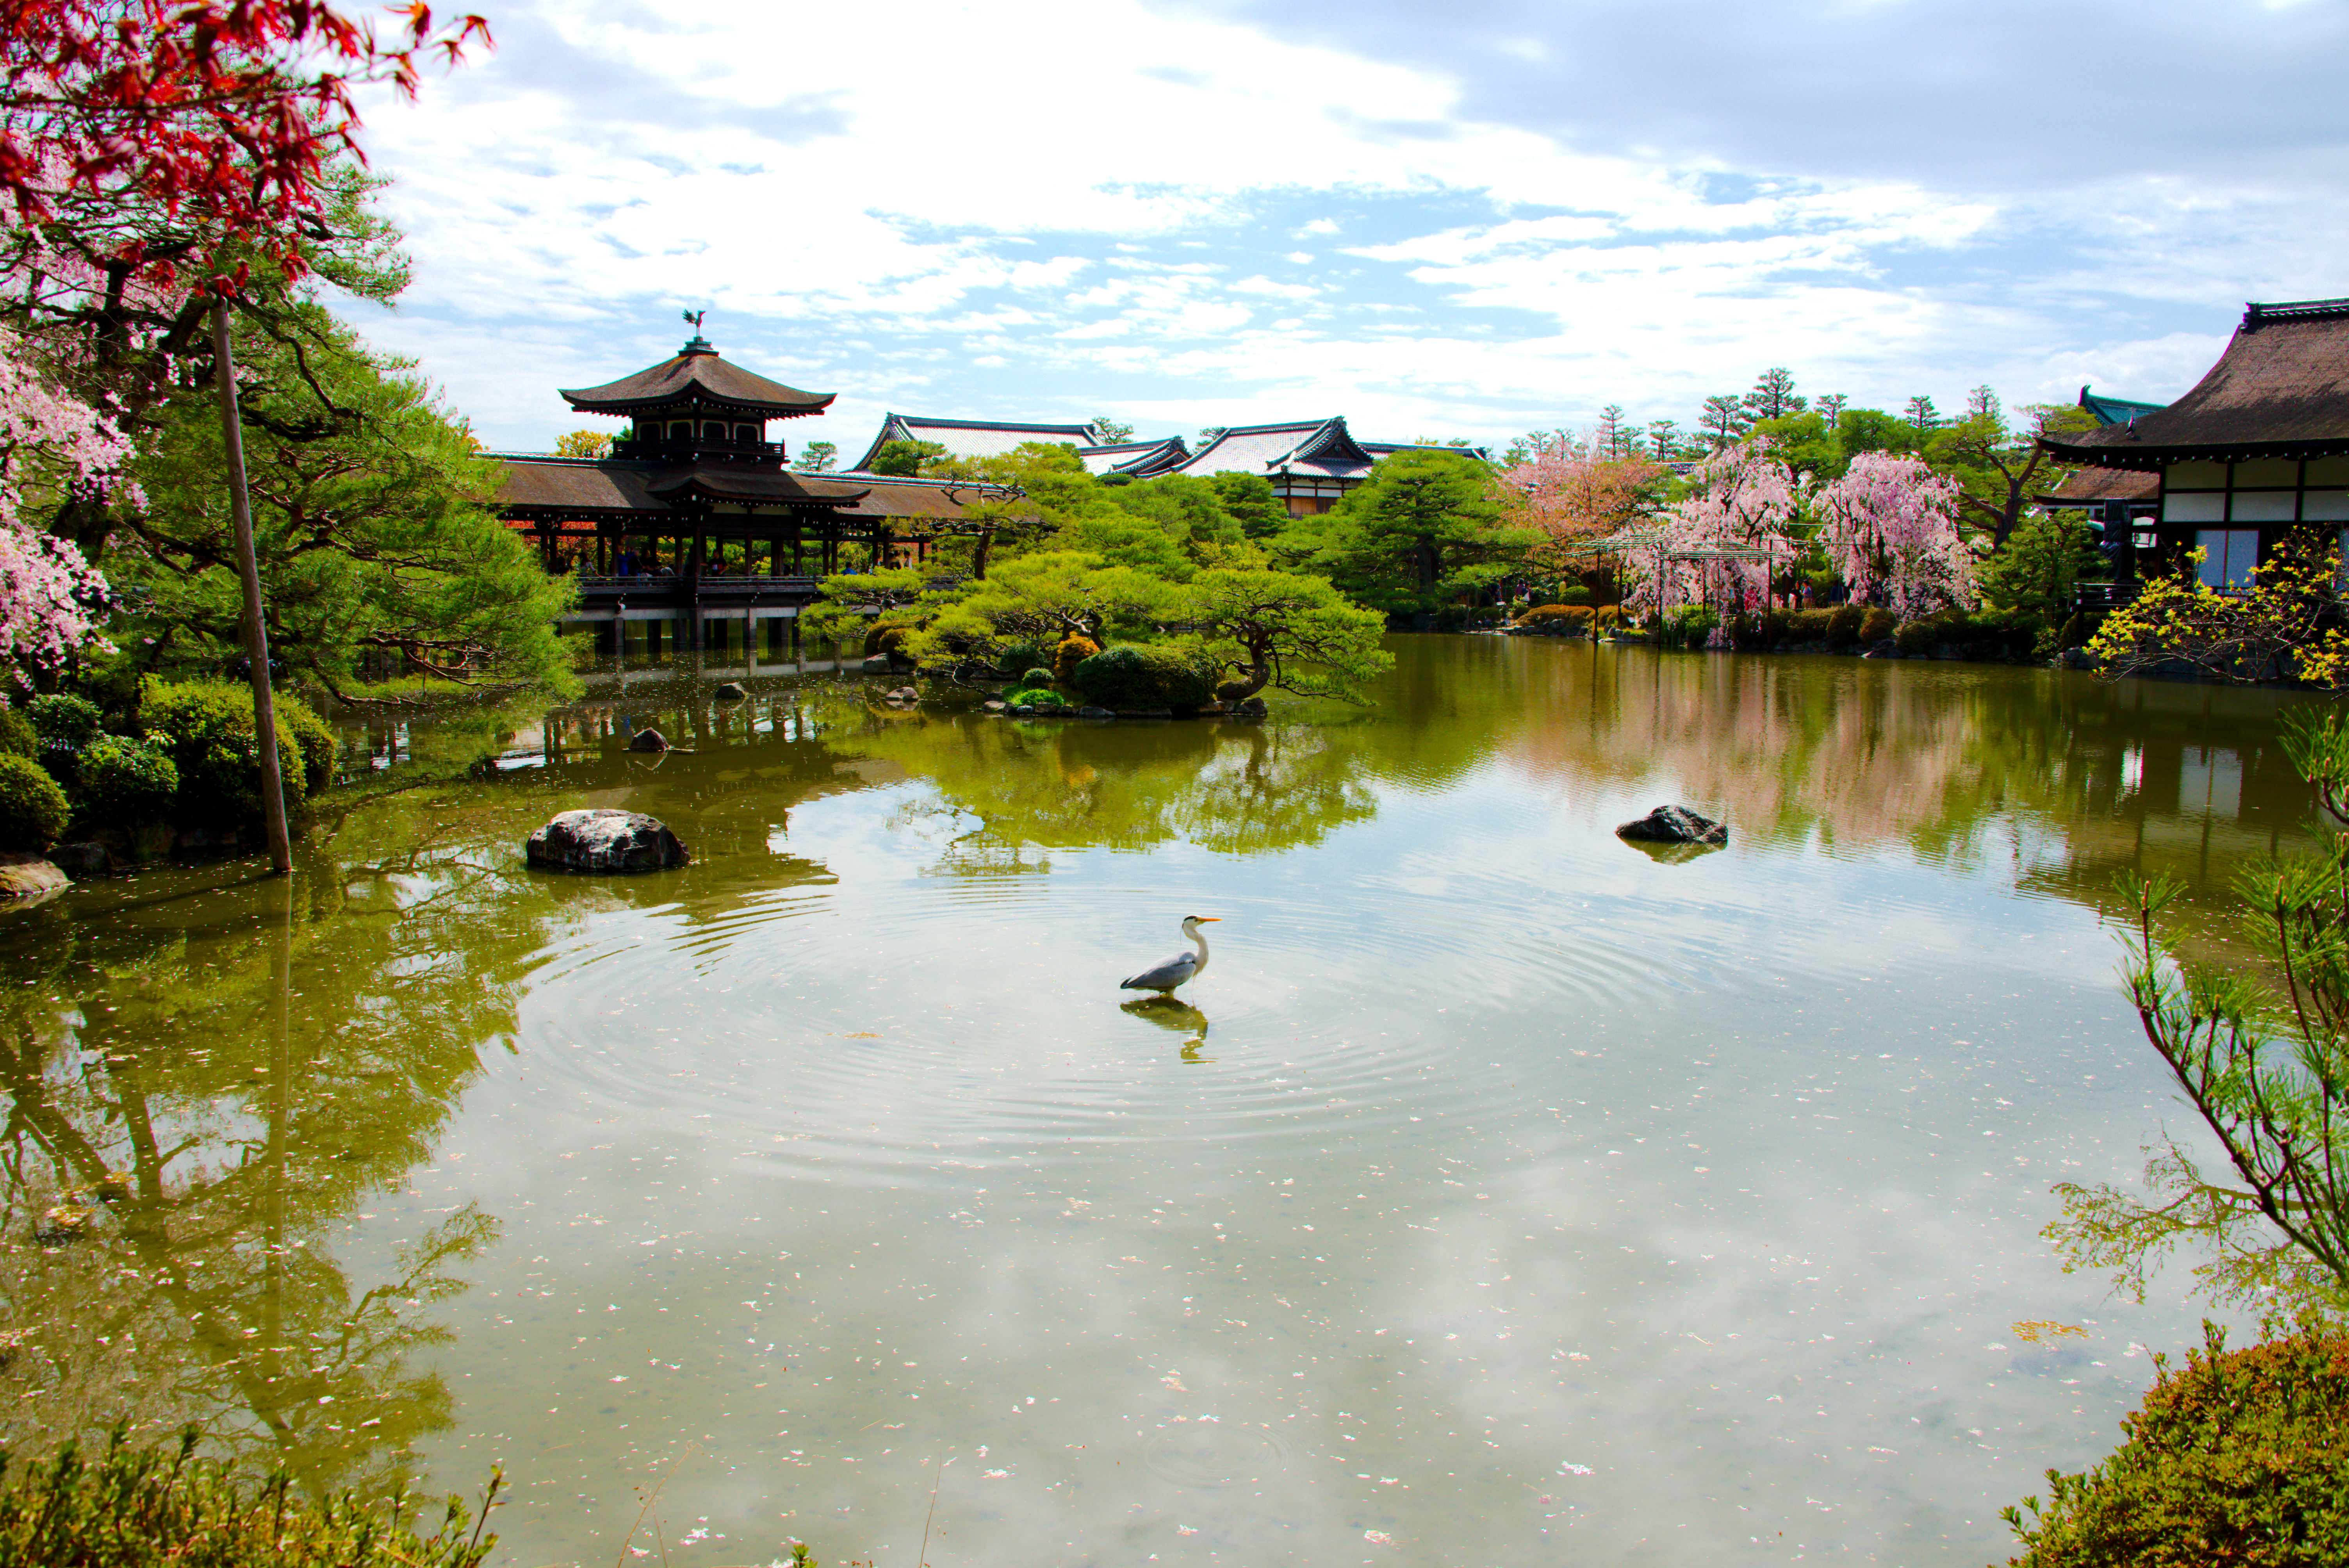 Crane in the Pond of Heian-jingu's Garden